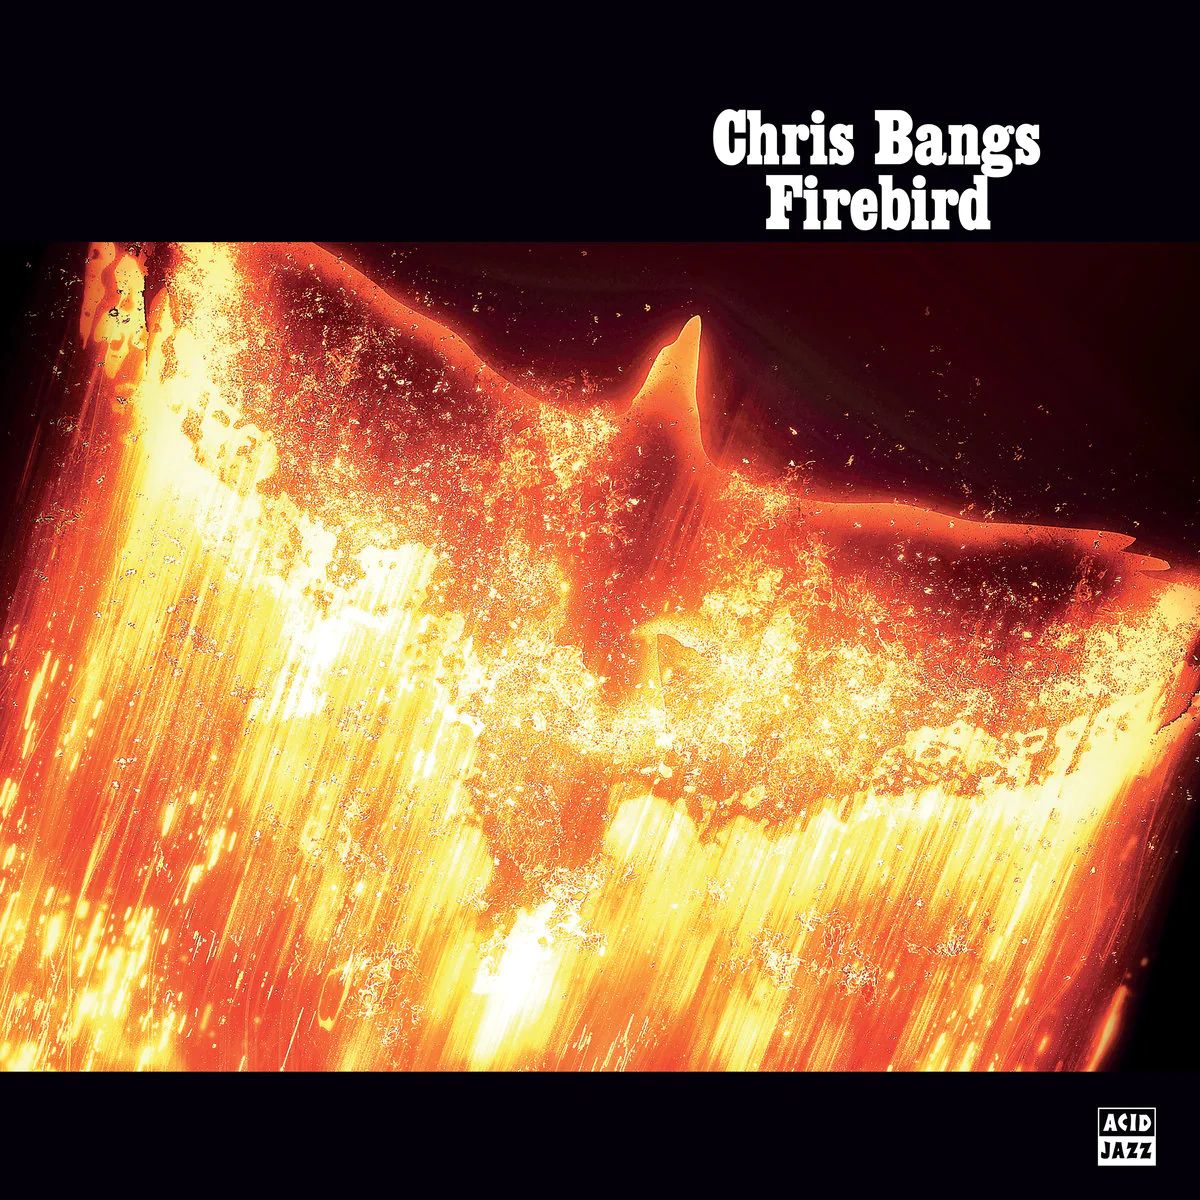 Виниловая пластинка Bangs, Chris, Firebird (0676499066157) виниловая пластинка gantry chris nashlantis